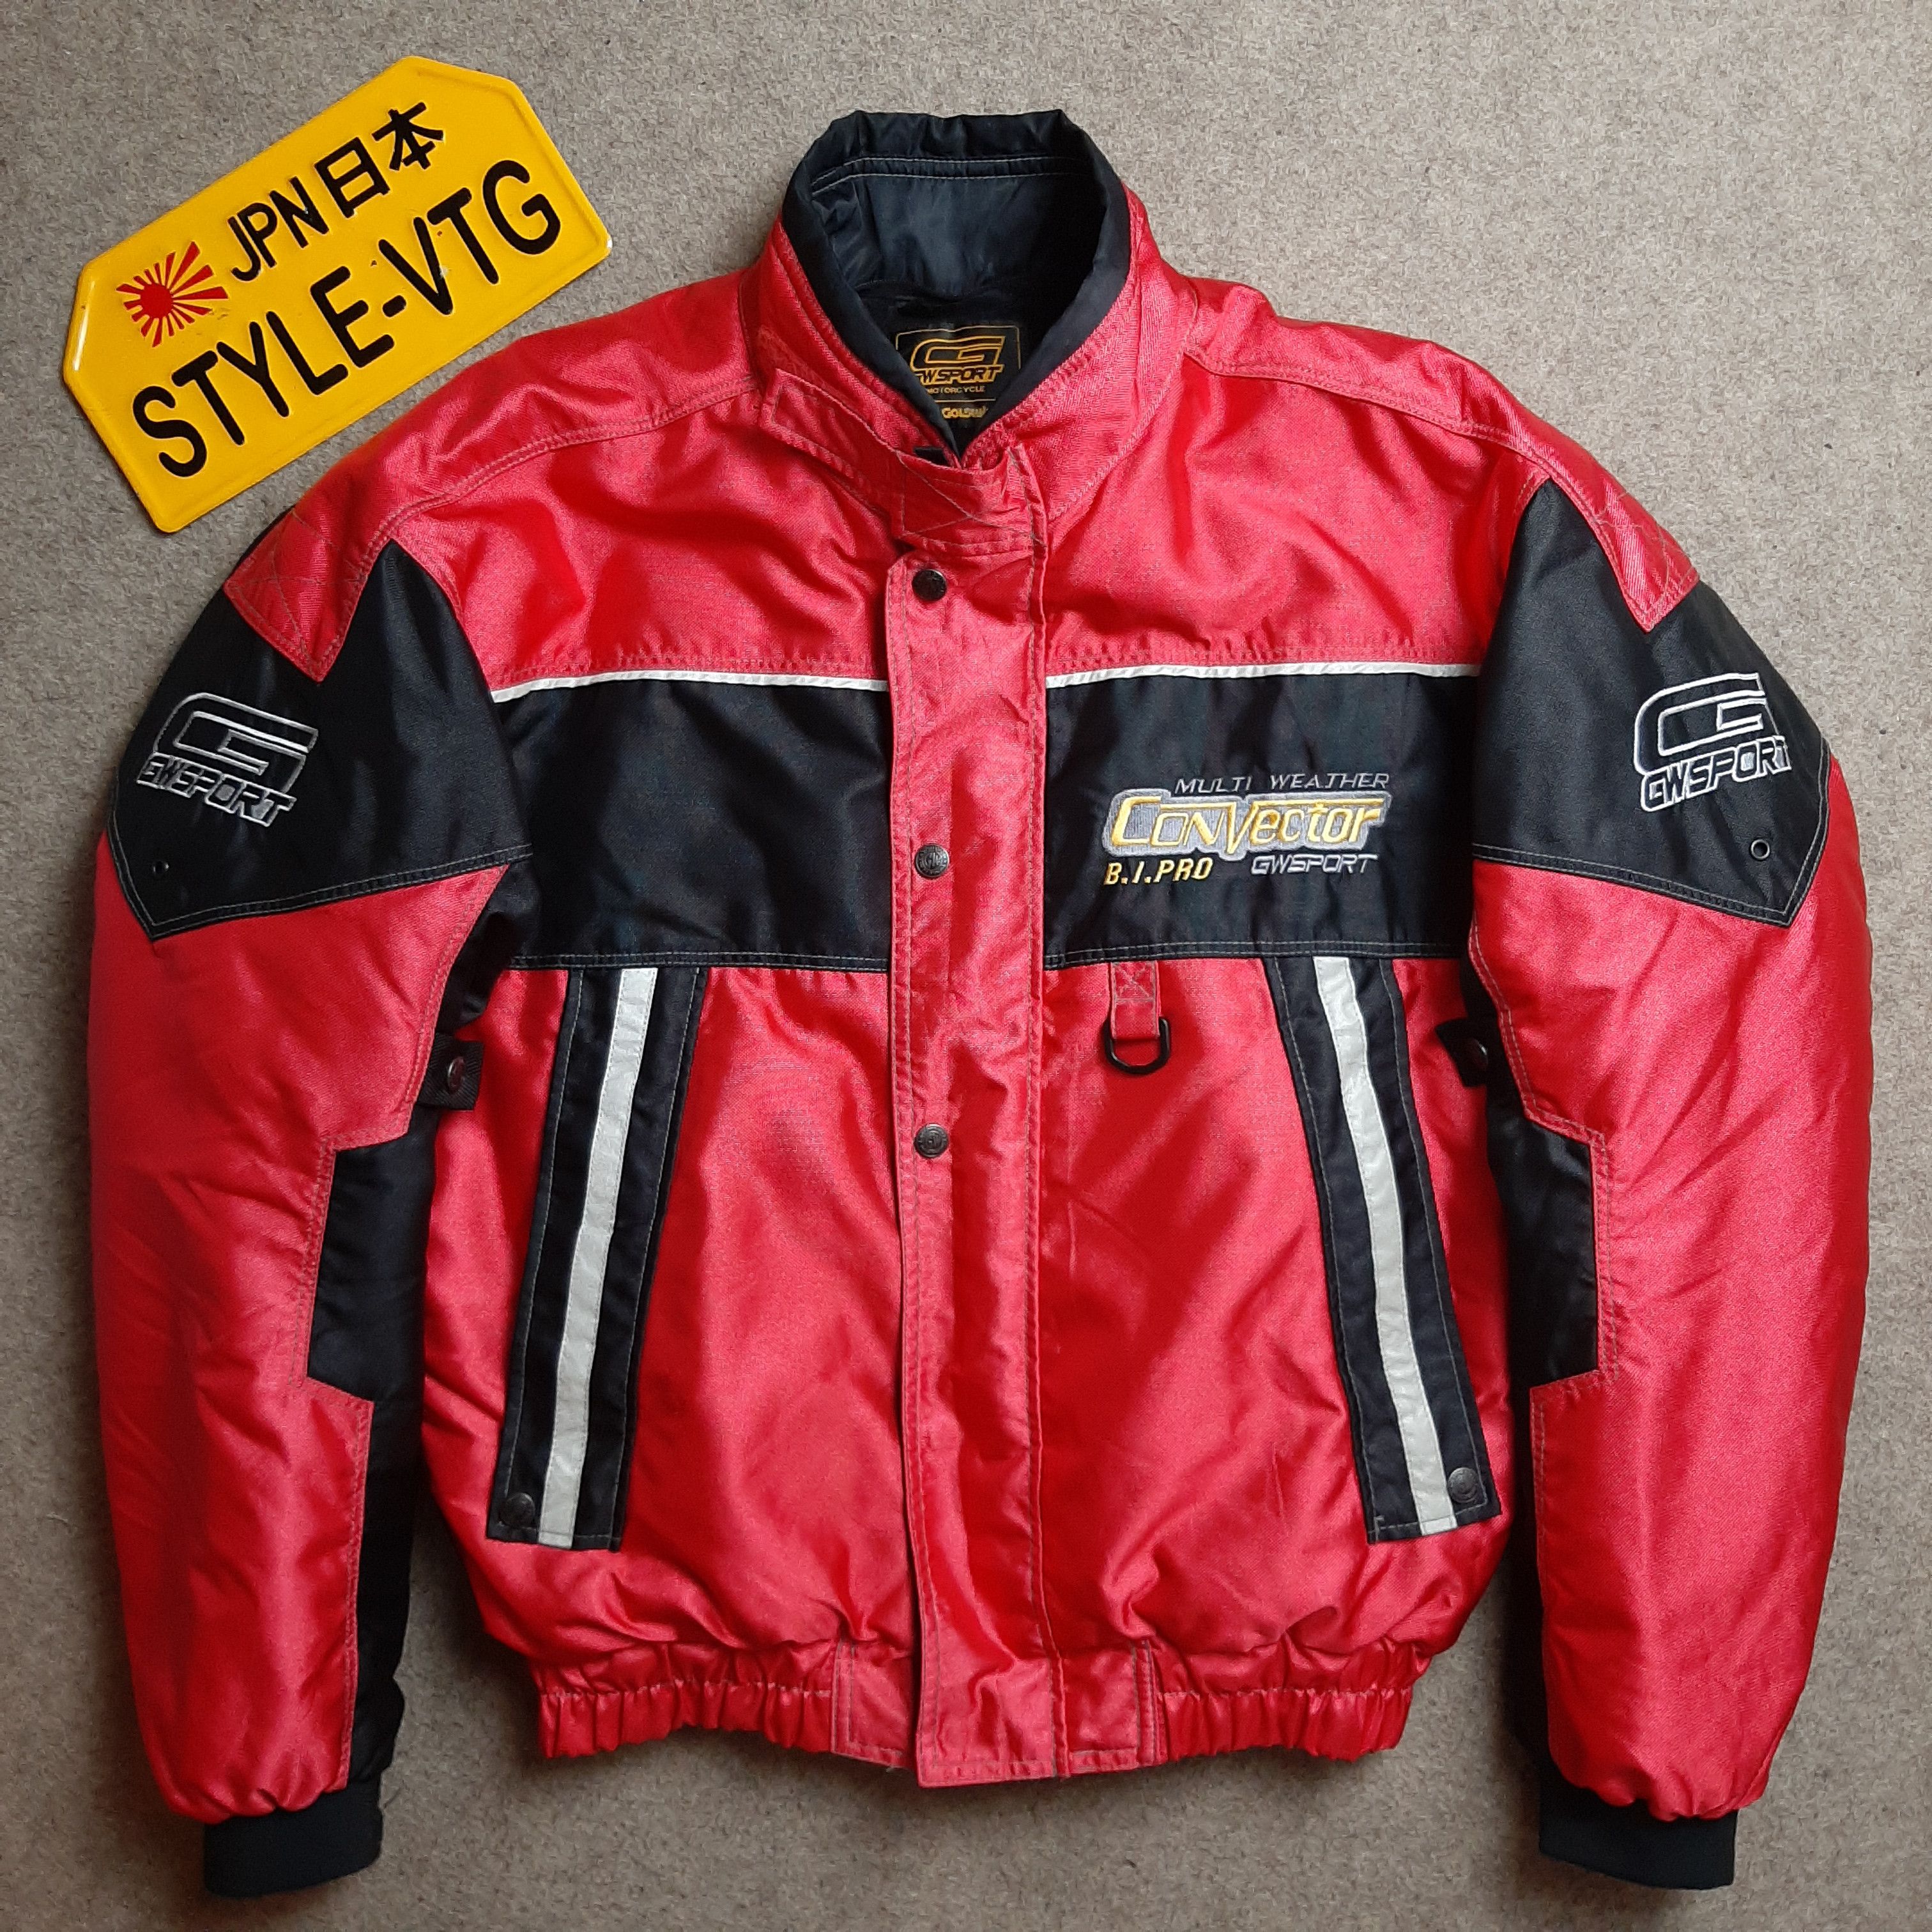 Vintage Goldwin converctor vintage motorcycle jacket Size US M / EU 48-50 / 2 - 1 Preview